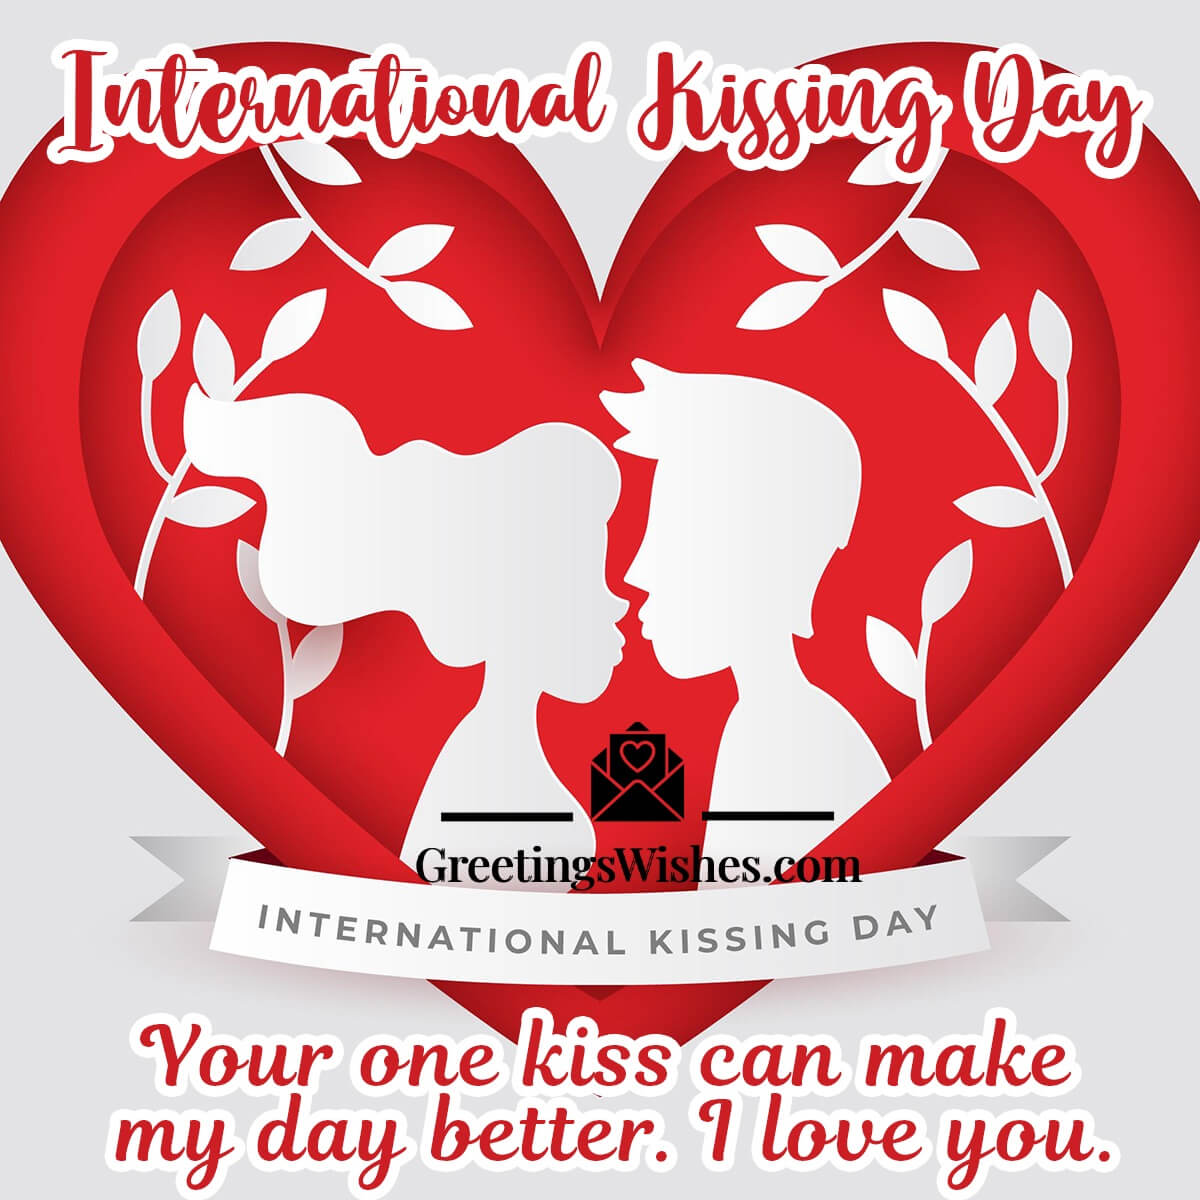 International Kissing Day Image